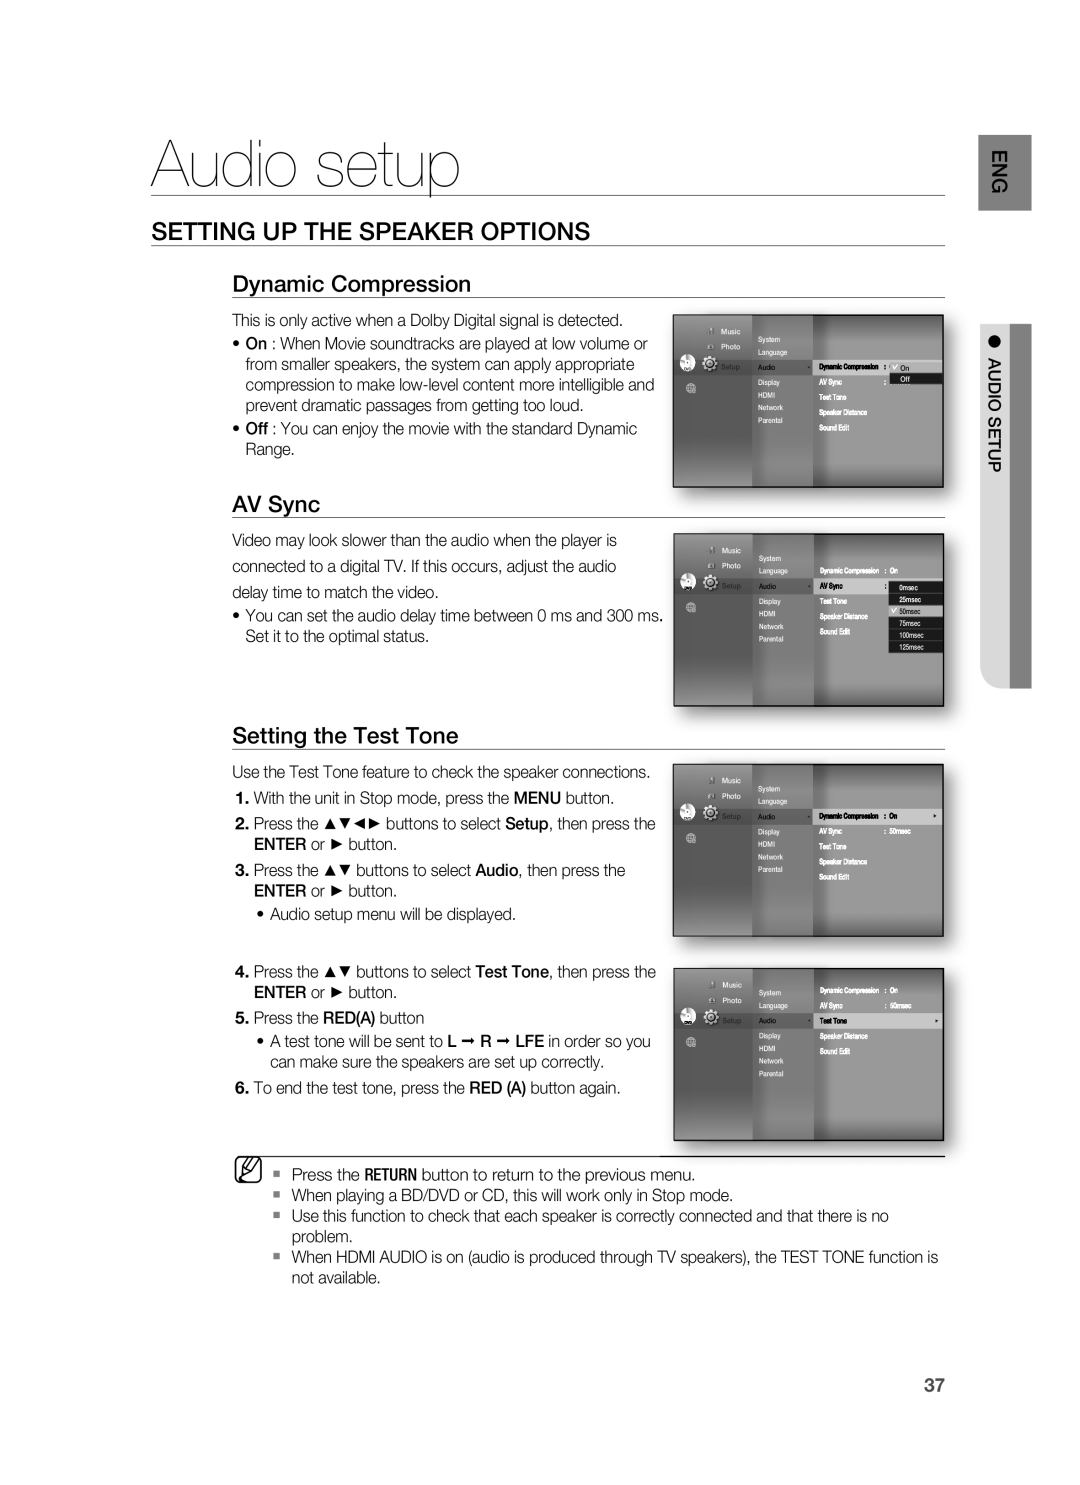 Samsung HT-BD8200 Audio setup, Setting Up The Speaker Options, Dynamic Compression, AV Sync, Setting the Test Tone 